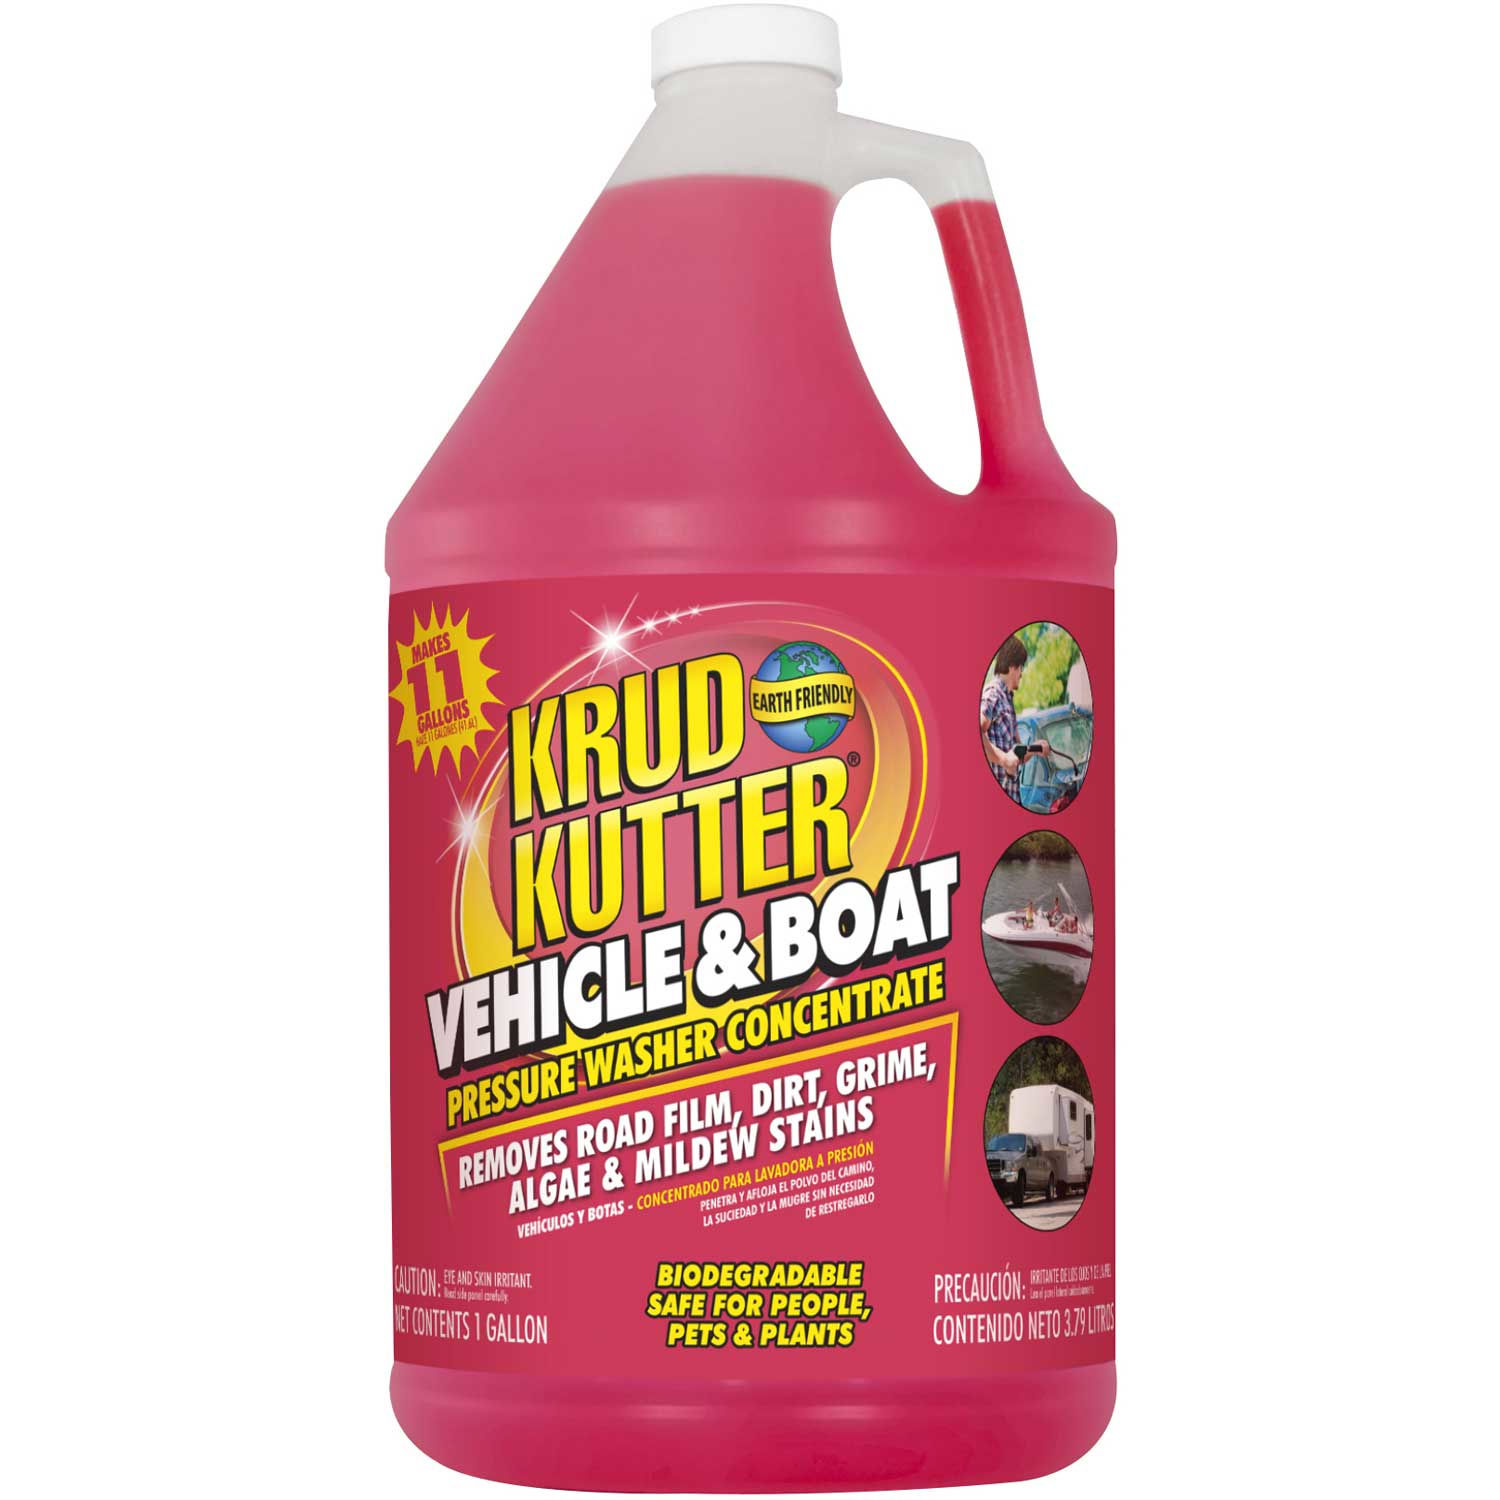 krud-kutter-pressure-washer-concentrate-vehicle-boat-gallon-bottle-4